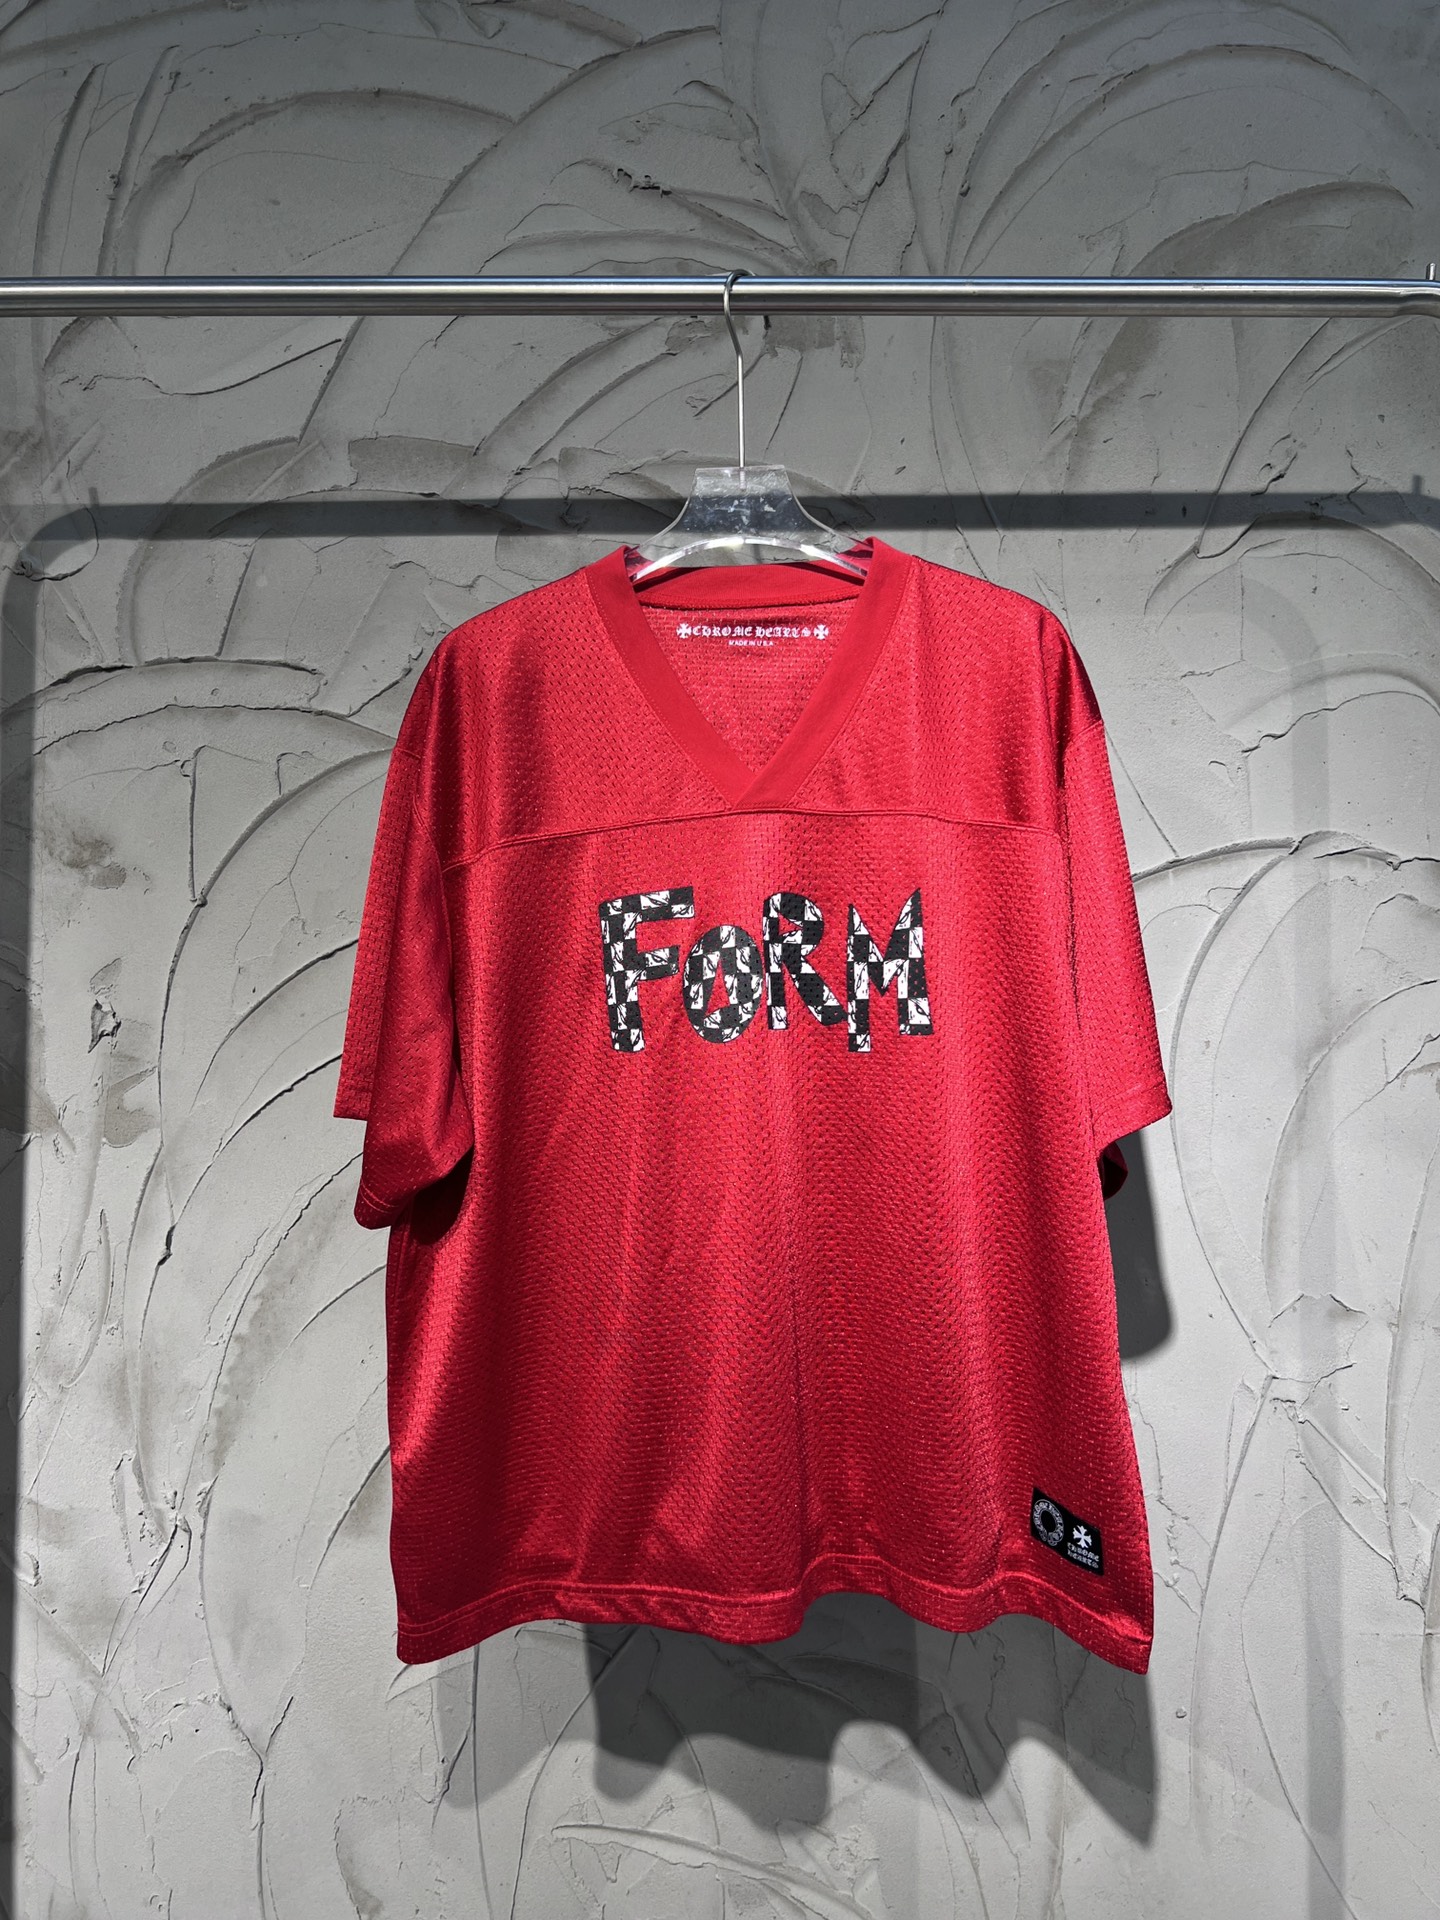 Chrome Hearts Clothing Coats & Jackets T-Shirt Doodle Boy Unisex Summer Collection Short Sleeve